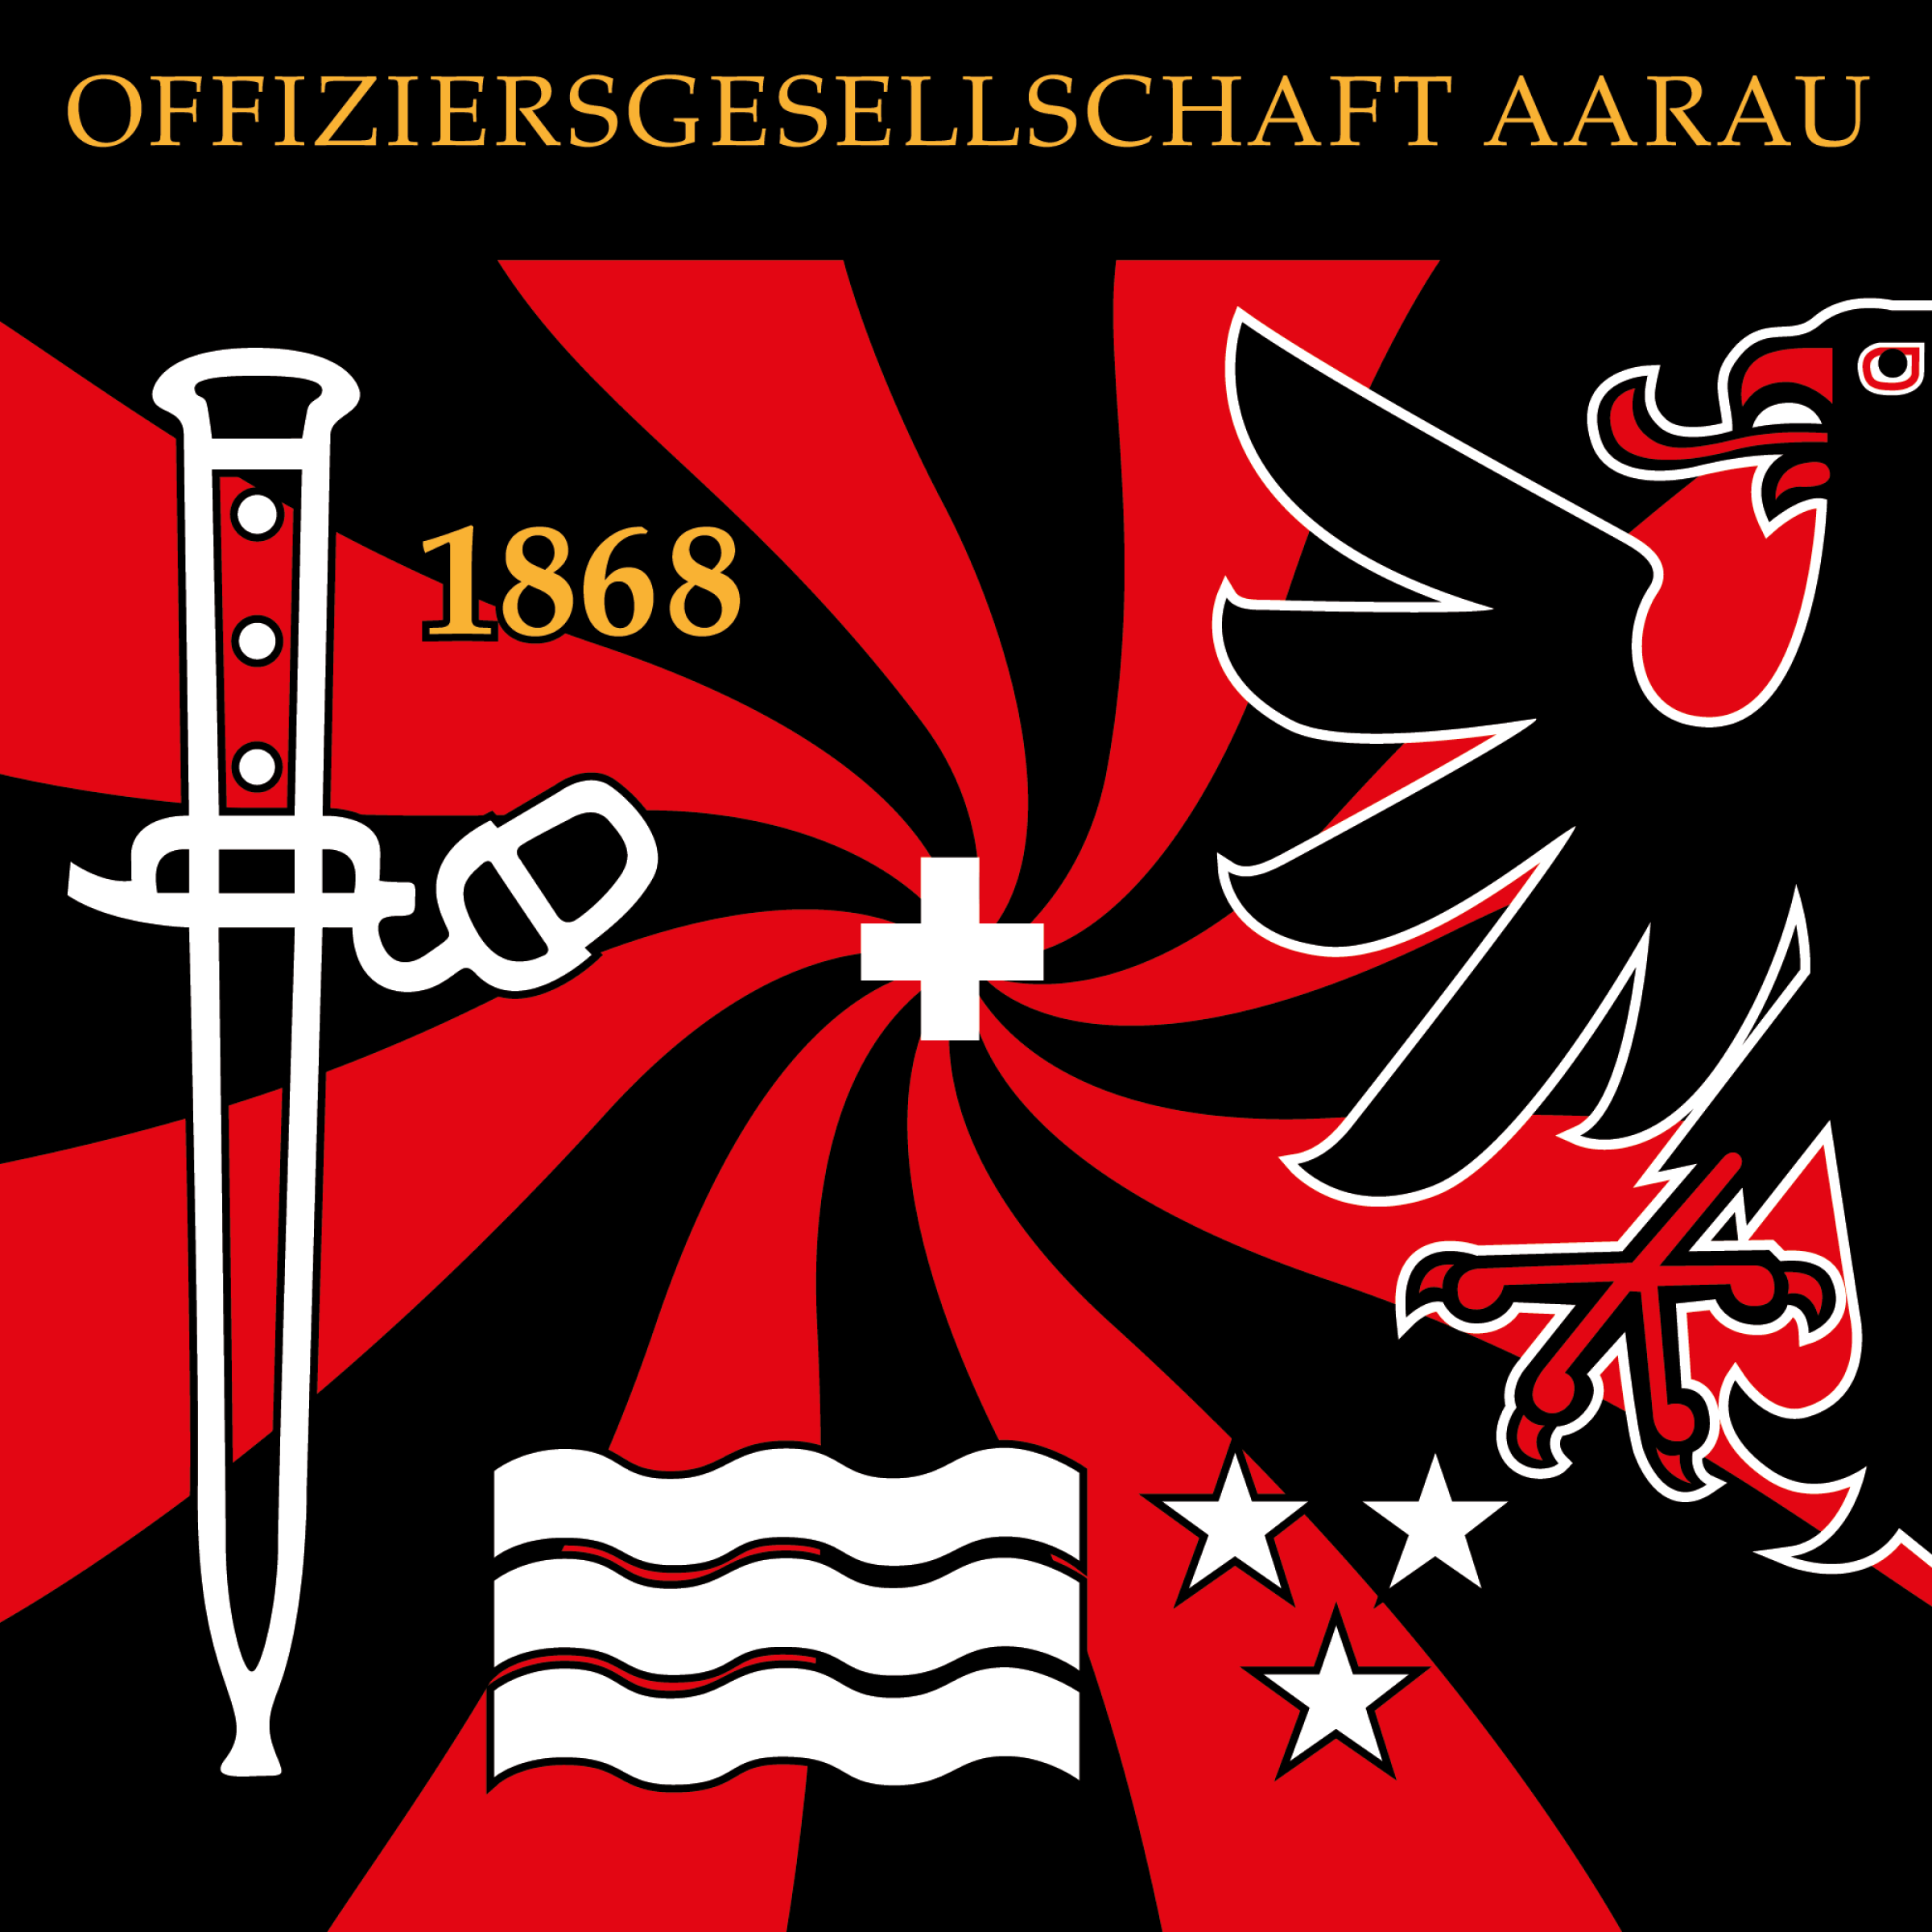 Die Standarte der Offiziersgesellschaft Aarau